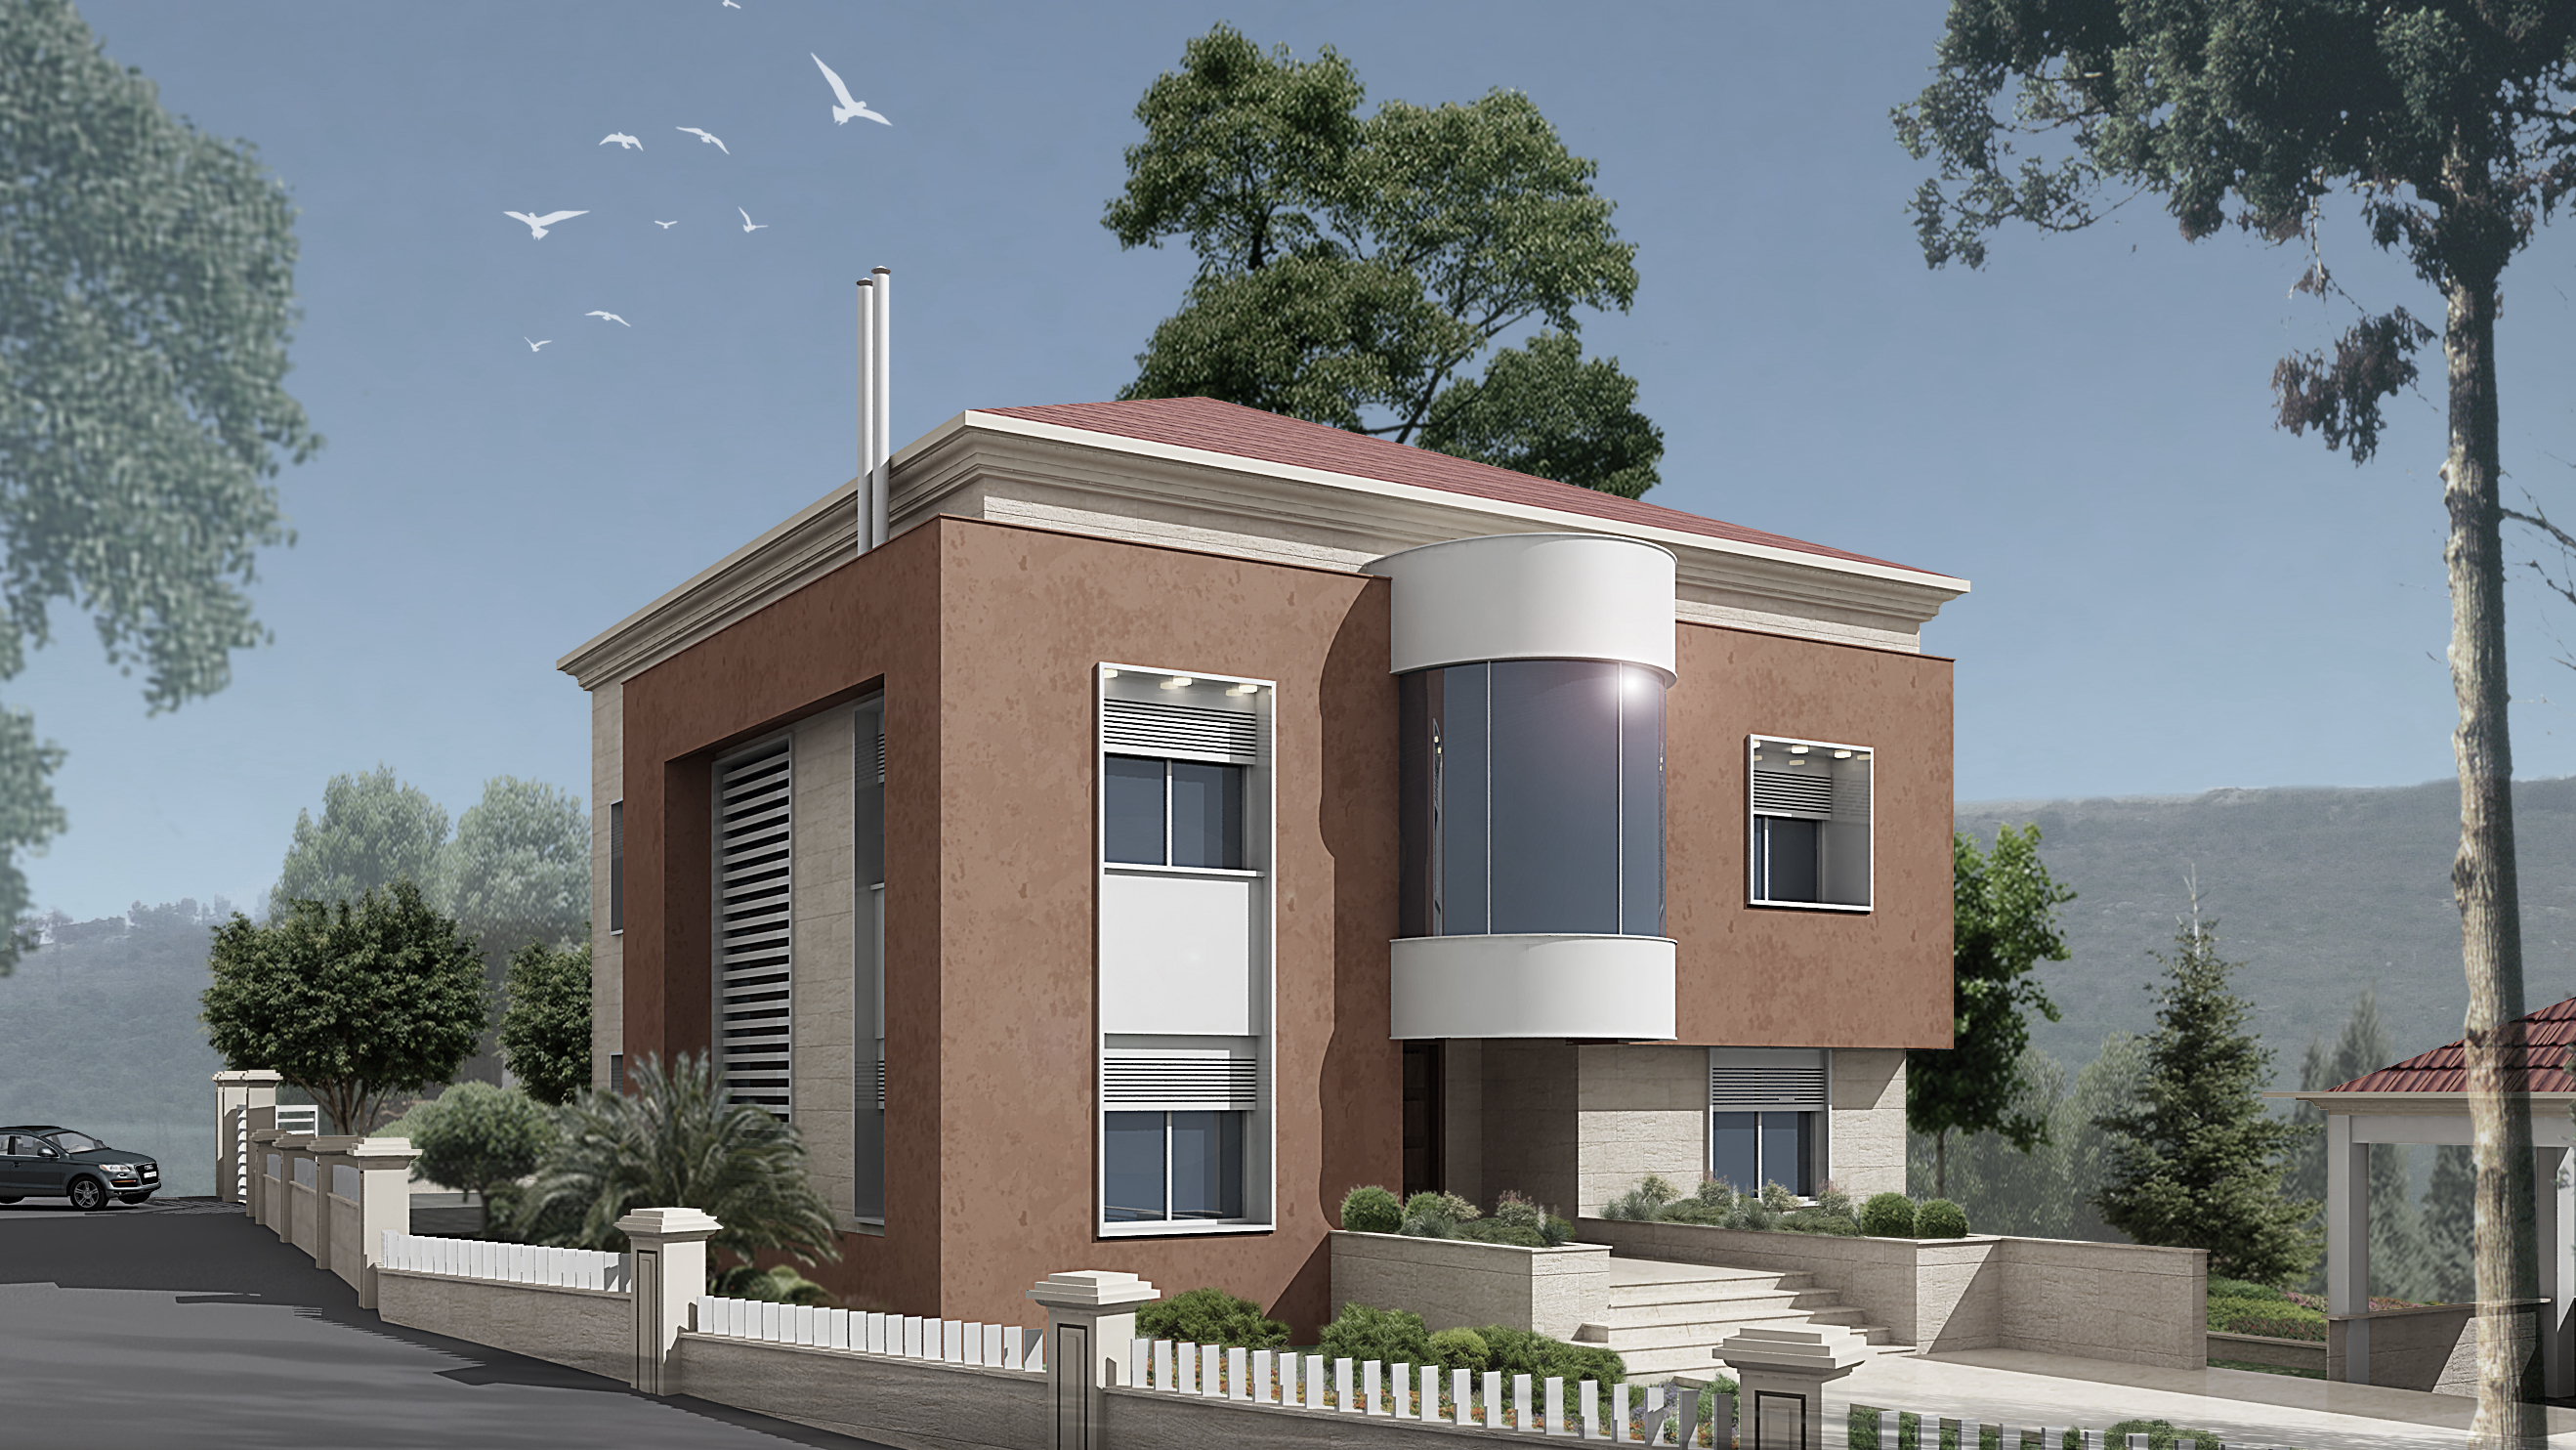 Image of the Hamdan Residence project